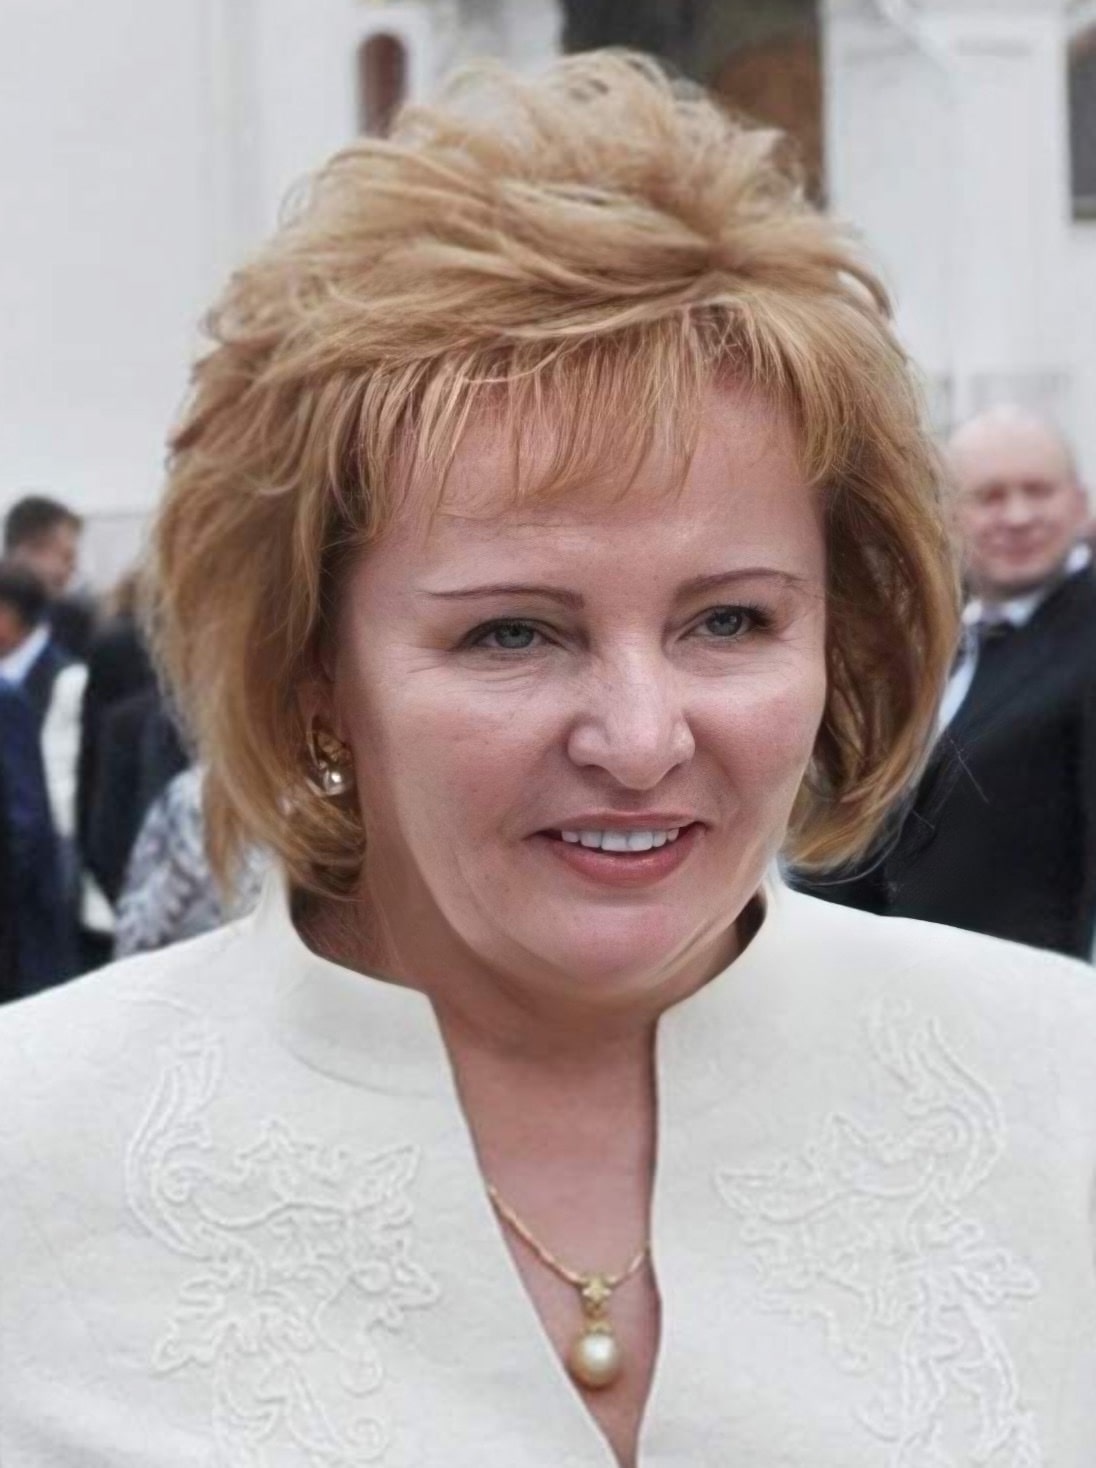 Lyudmila Putina, mother of Katerina Vladimirovna Tikhonova